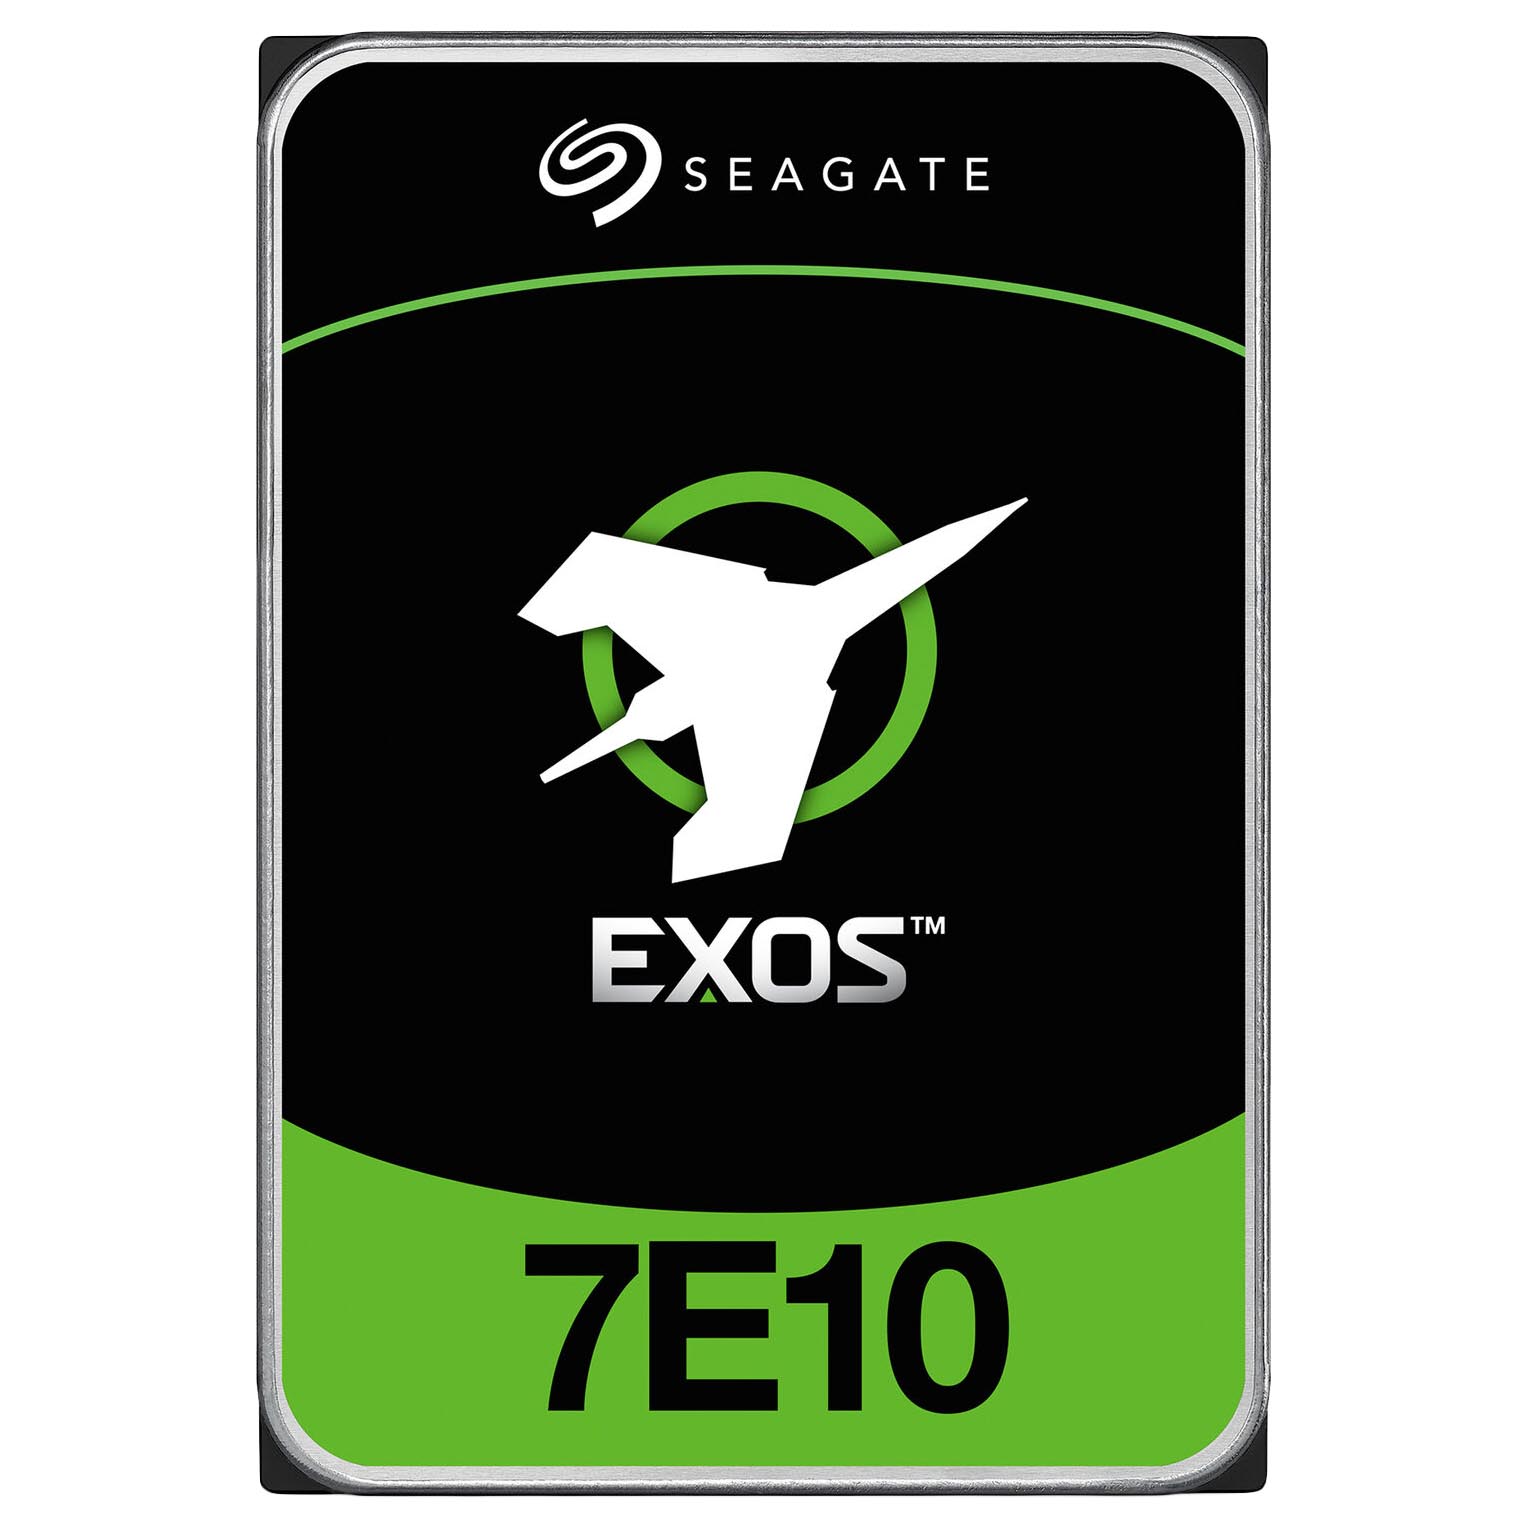 Внутренний жесткий диск Seagate Exos 7E10, ST10000NM017B, 10 Тб жесткий диск seagate exos x20 20 tb st20000nm007d